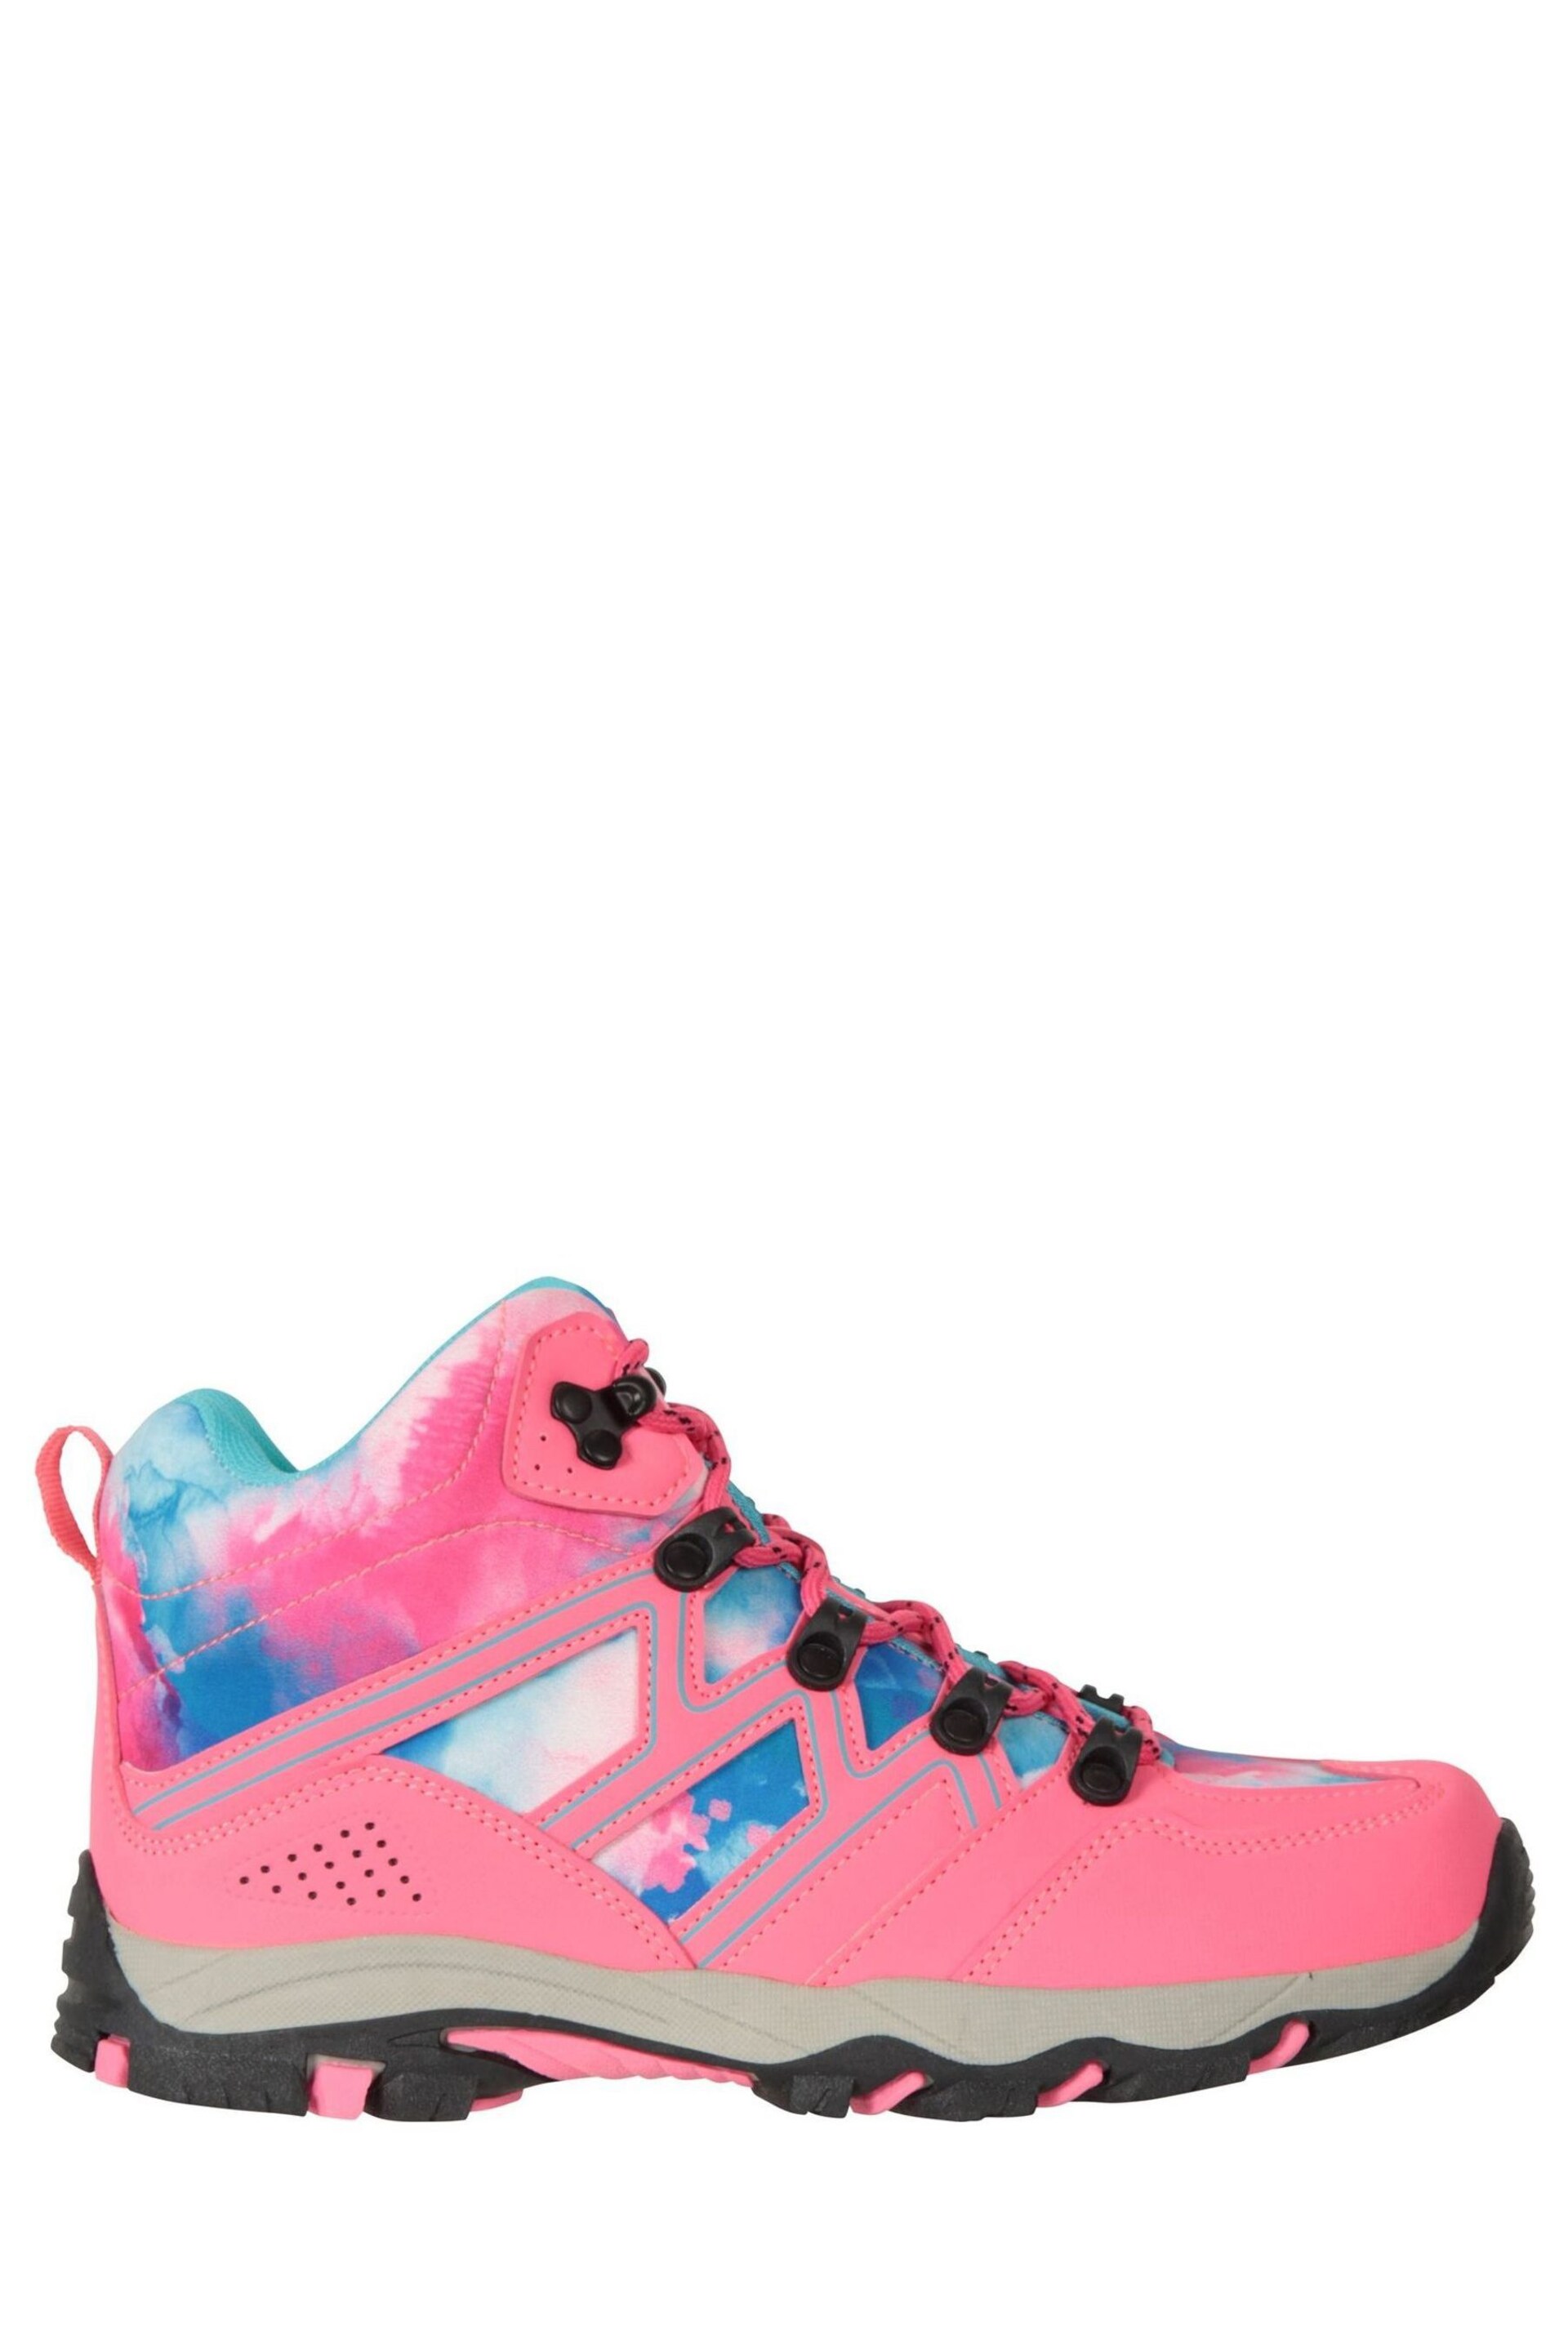 Mountain Warehouse Pink Oscar II Kids Walking Boots - Image 1 of 6